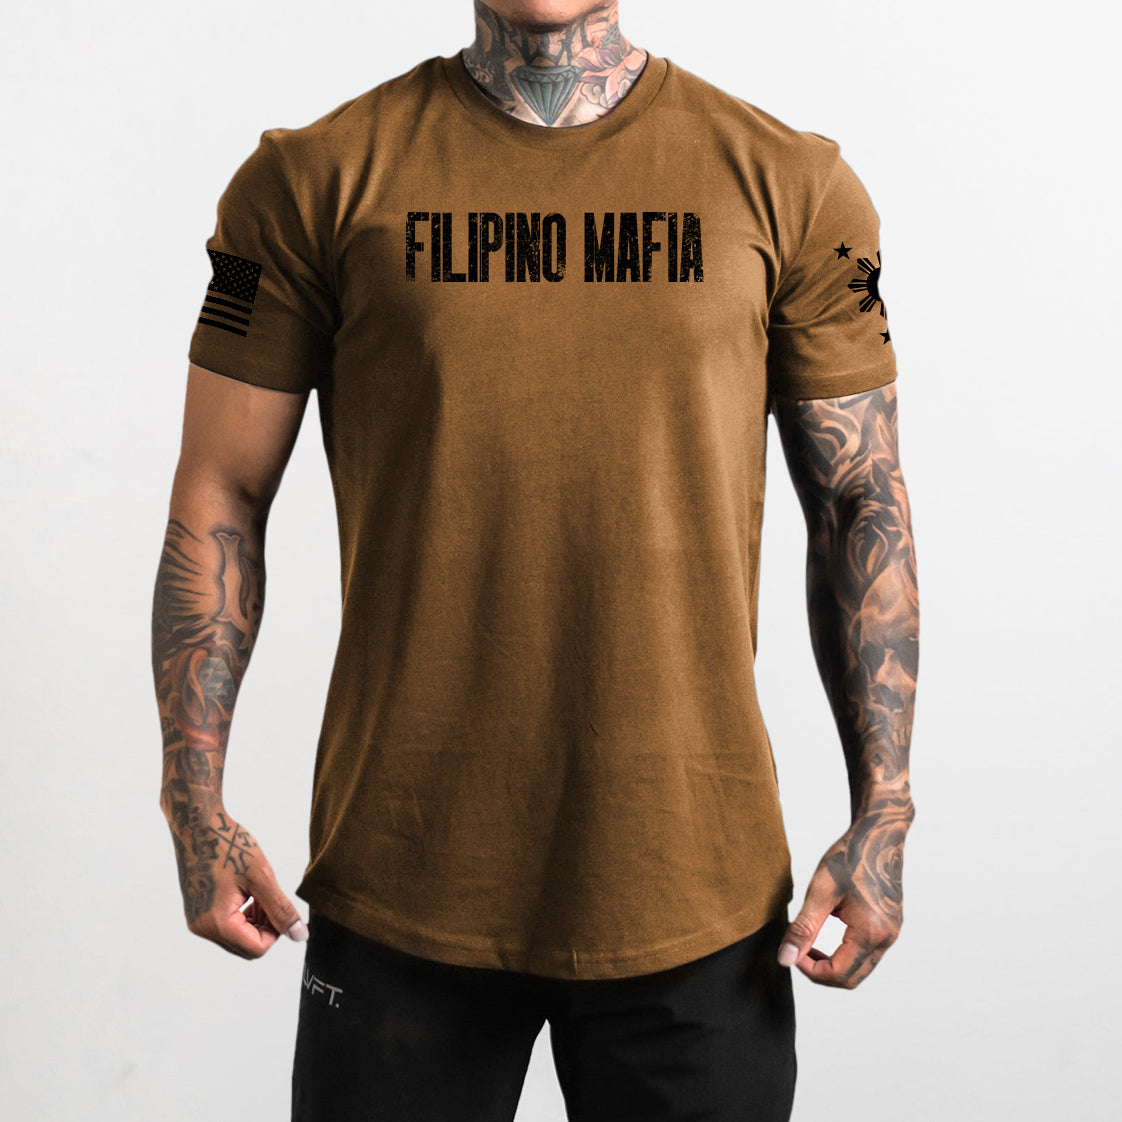 Filipino Mafia Shirt